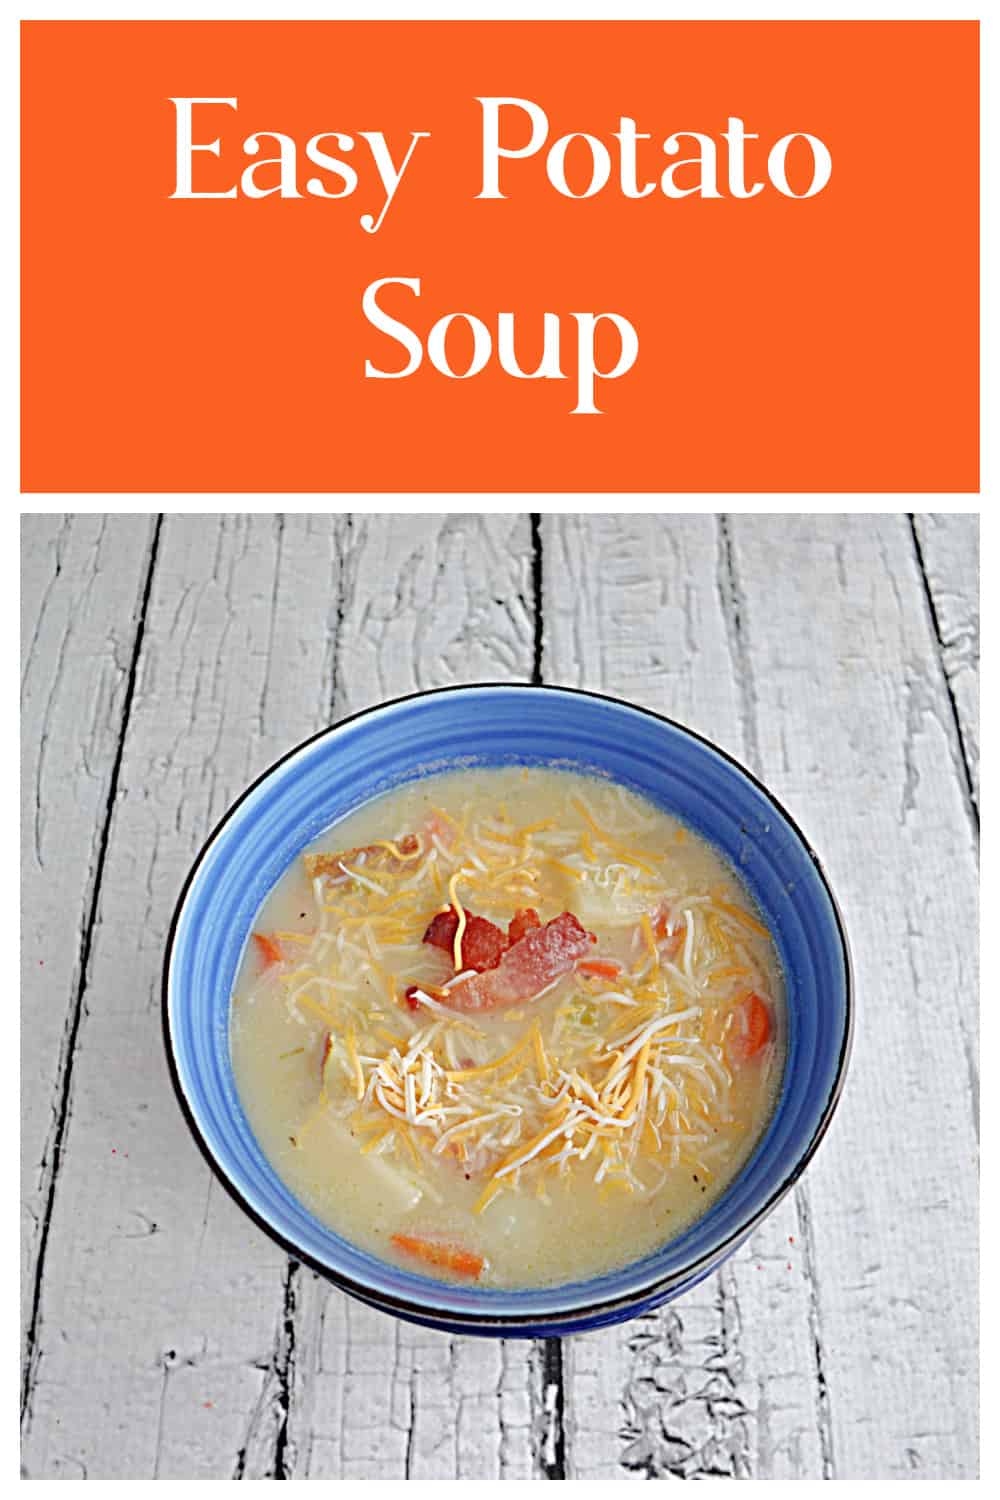 Pin Image:   Text title, a bowl of potato soup.